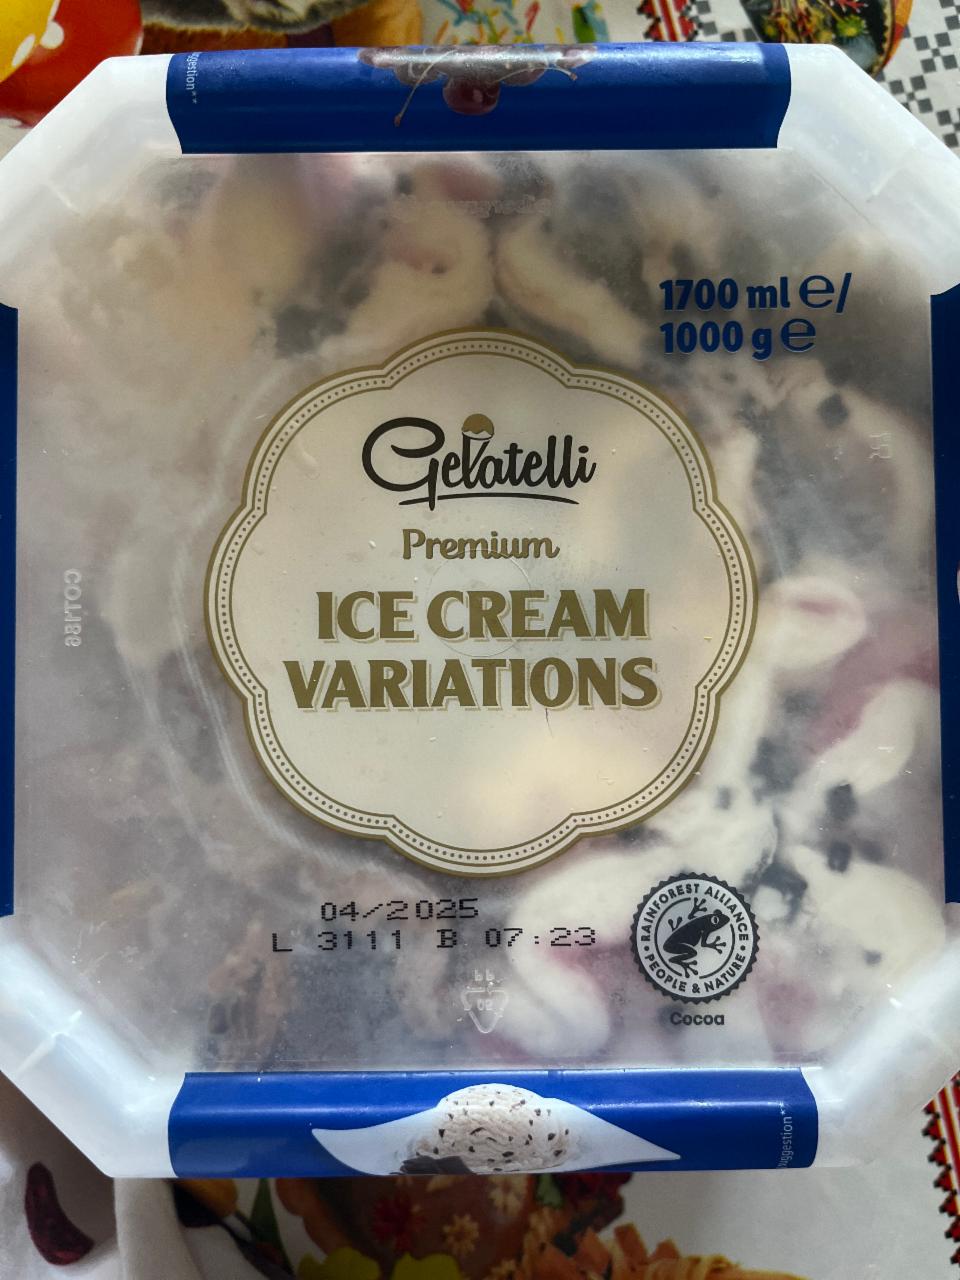 Képek - Premium variations fagylalt Gelatelli